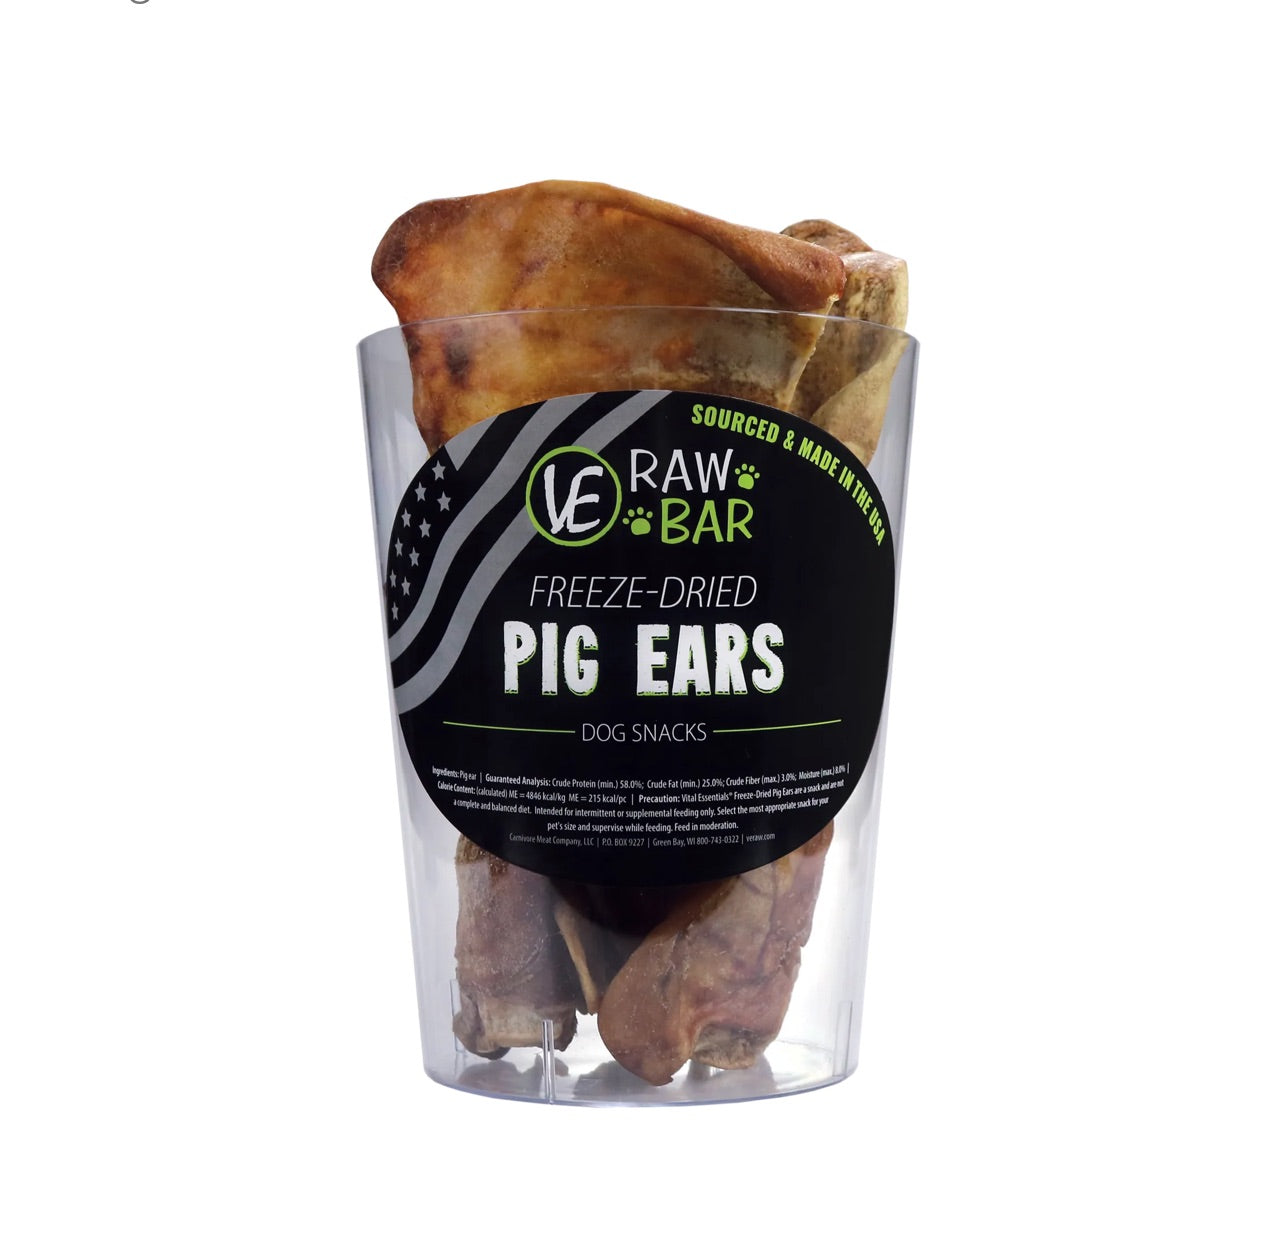 VE Raw Bar Pig Ears Freeze-Dried Snack